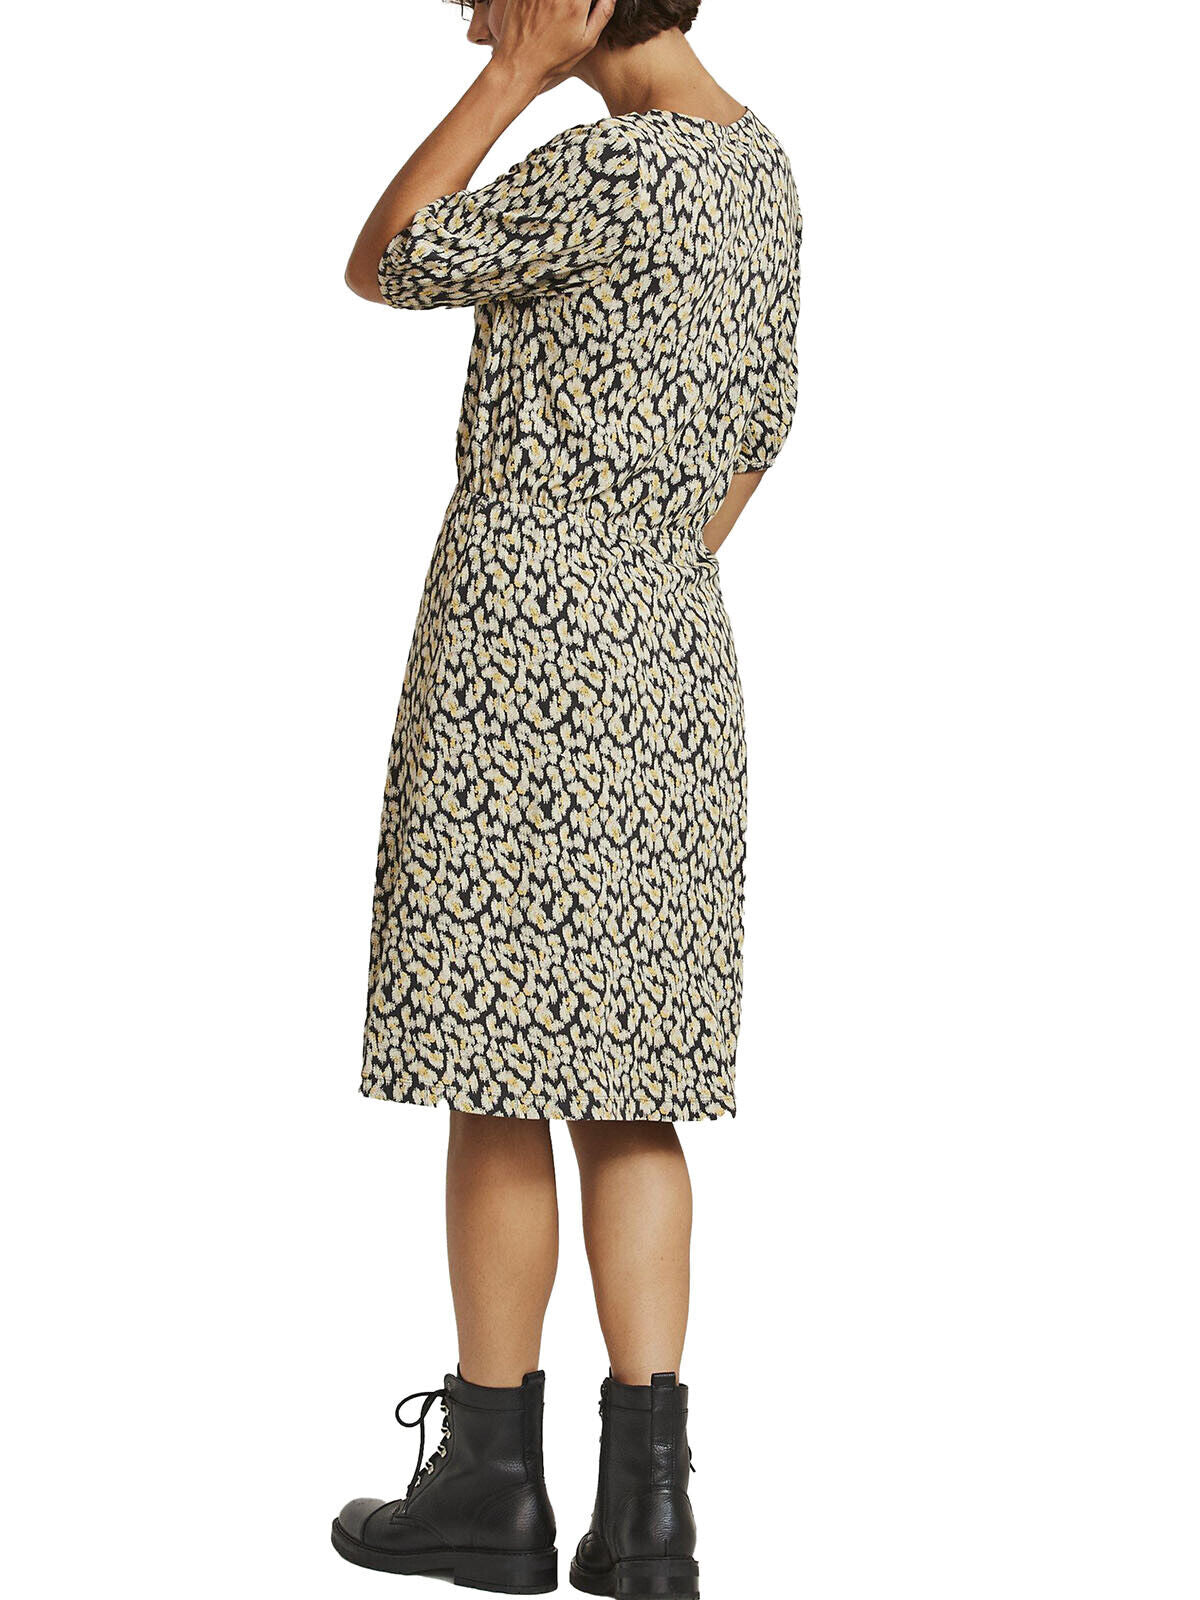 EX Fat Face Multi Iona Ikat Texture Dress Sizes 8 10 12 14 16 18 20 RRP £46